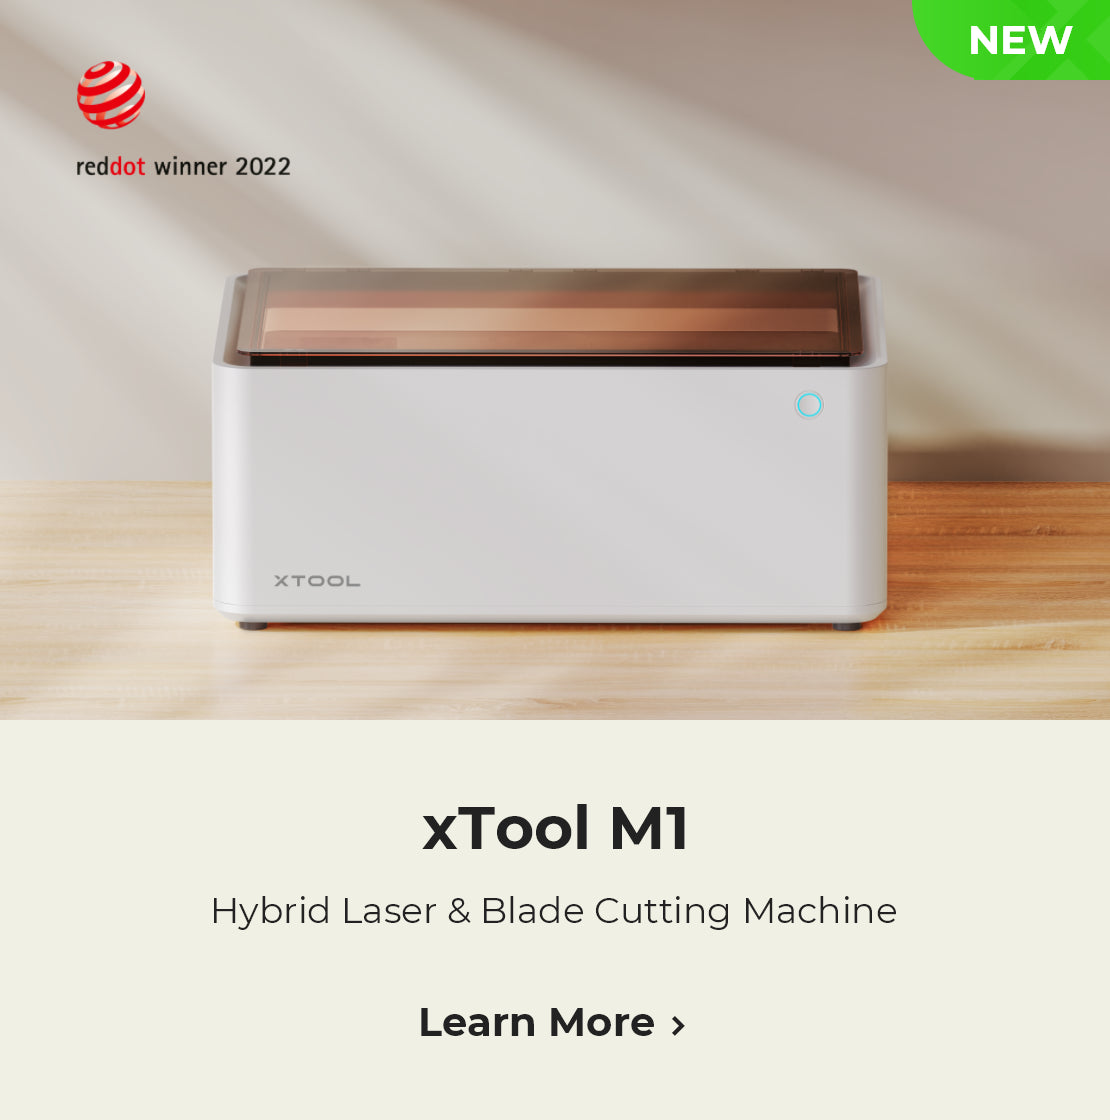 xTool M1 hybrid laser & blade cutting machine